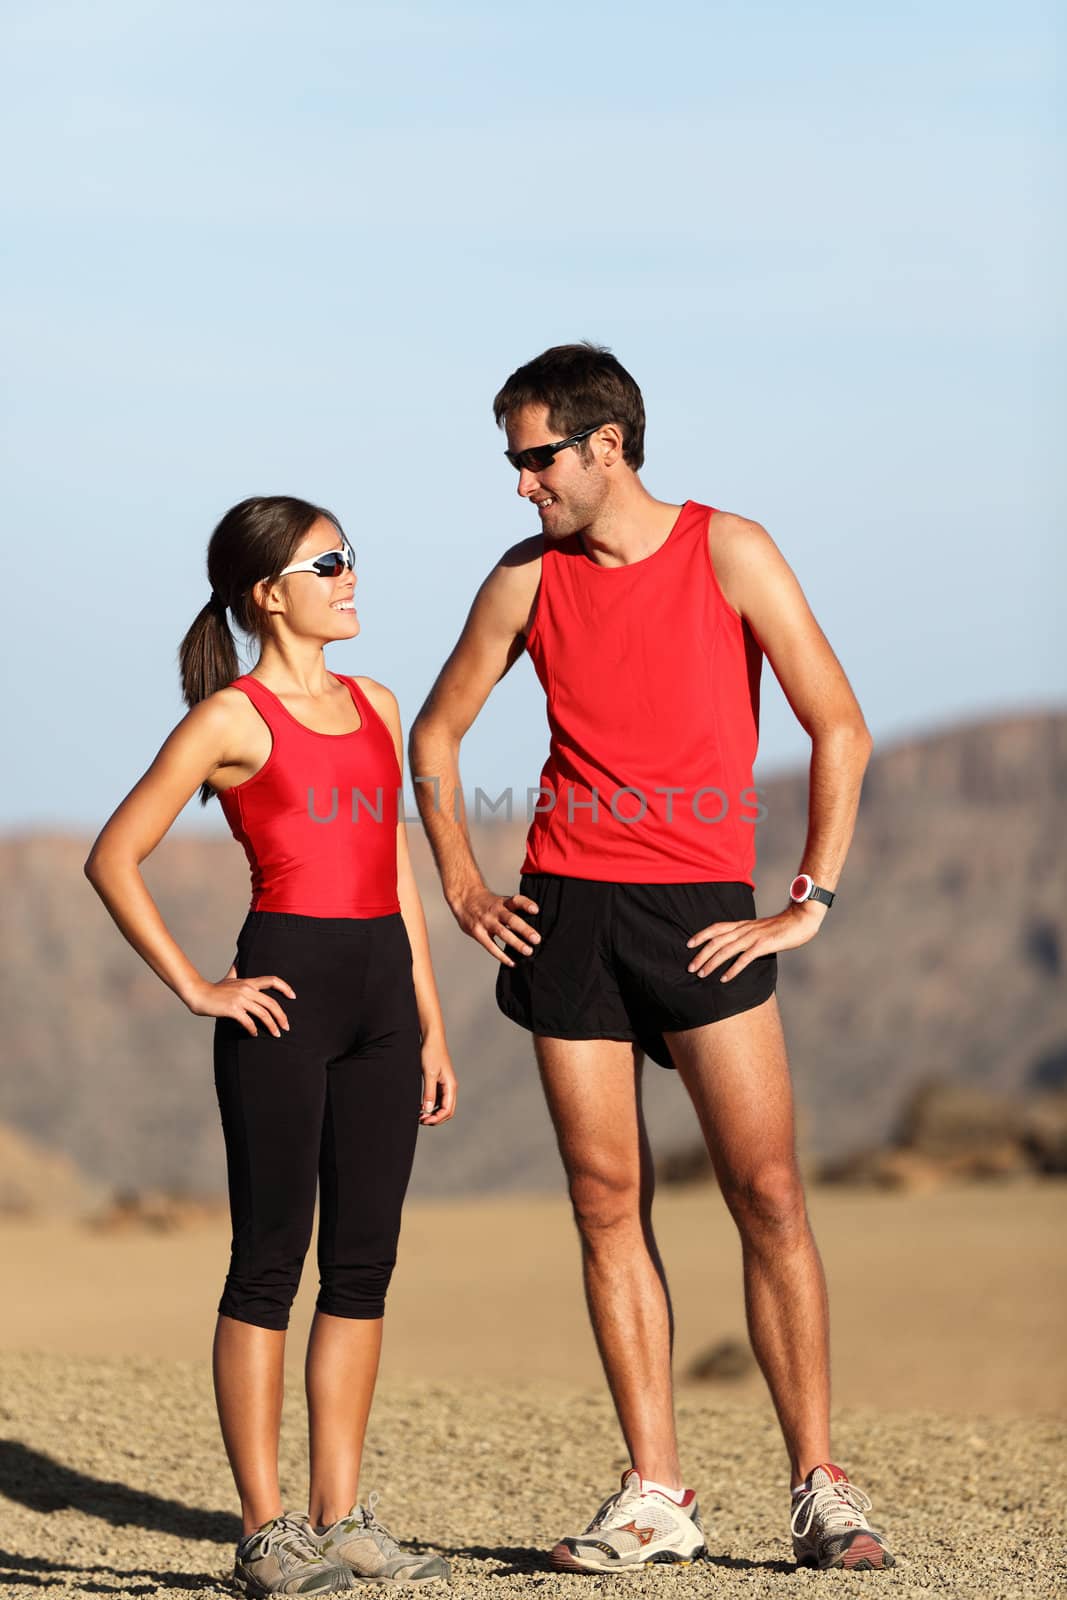 Runner couple in nature taking a break after running in desert mountain landscape.